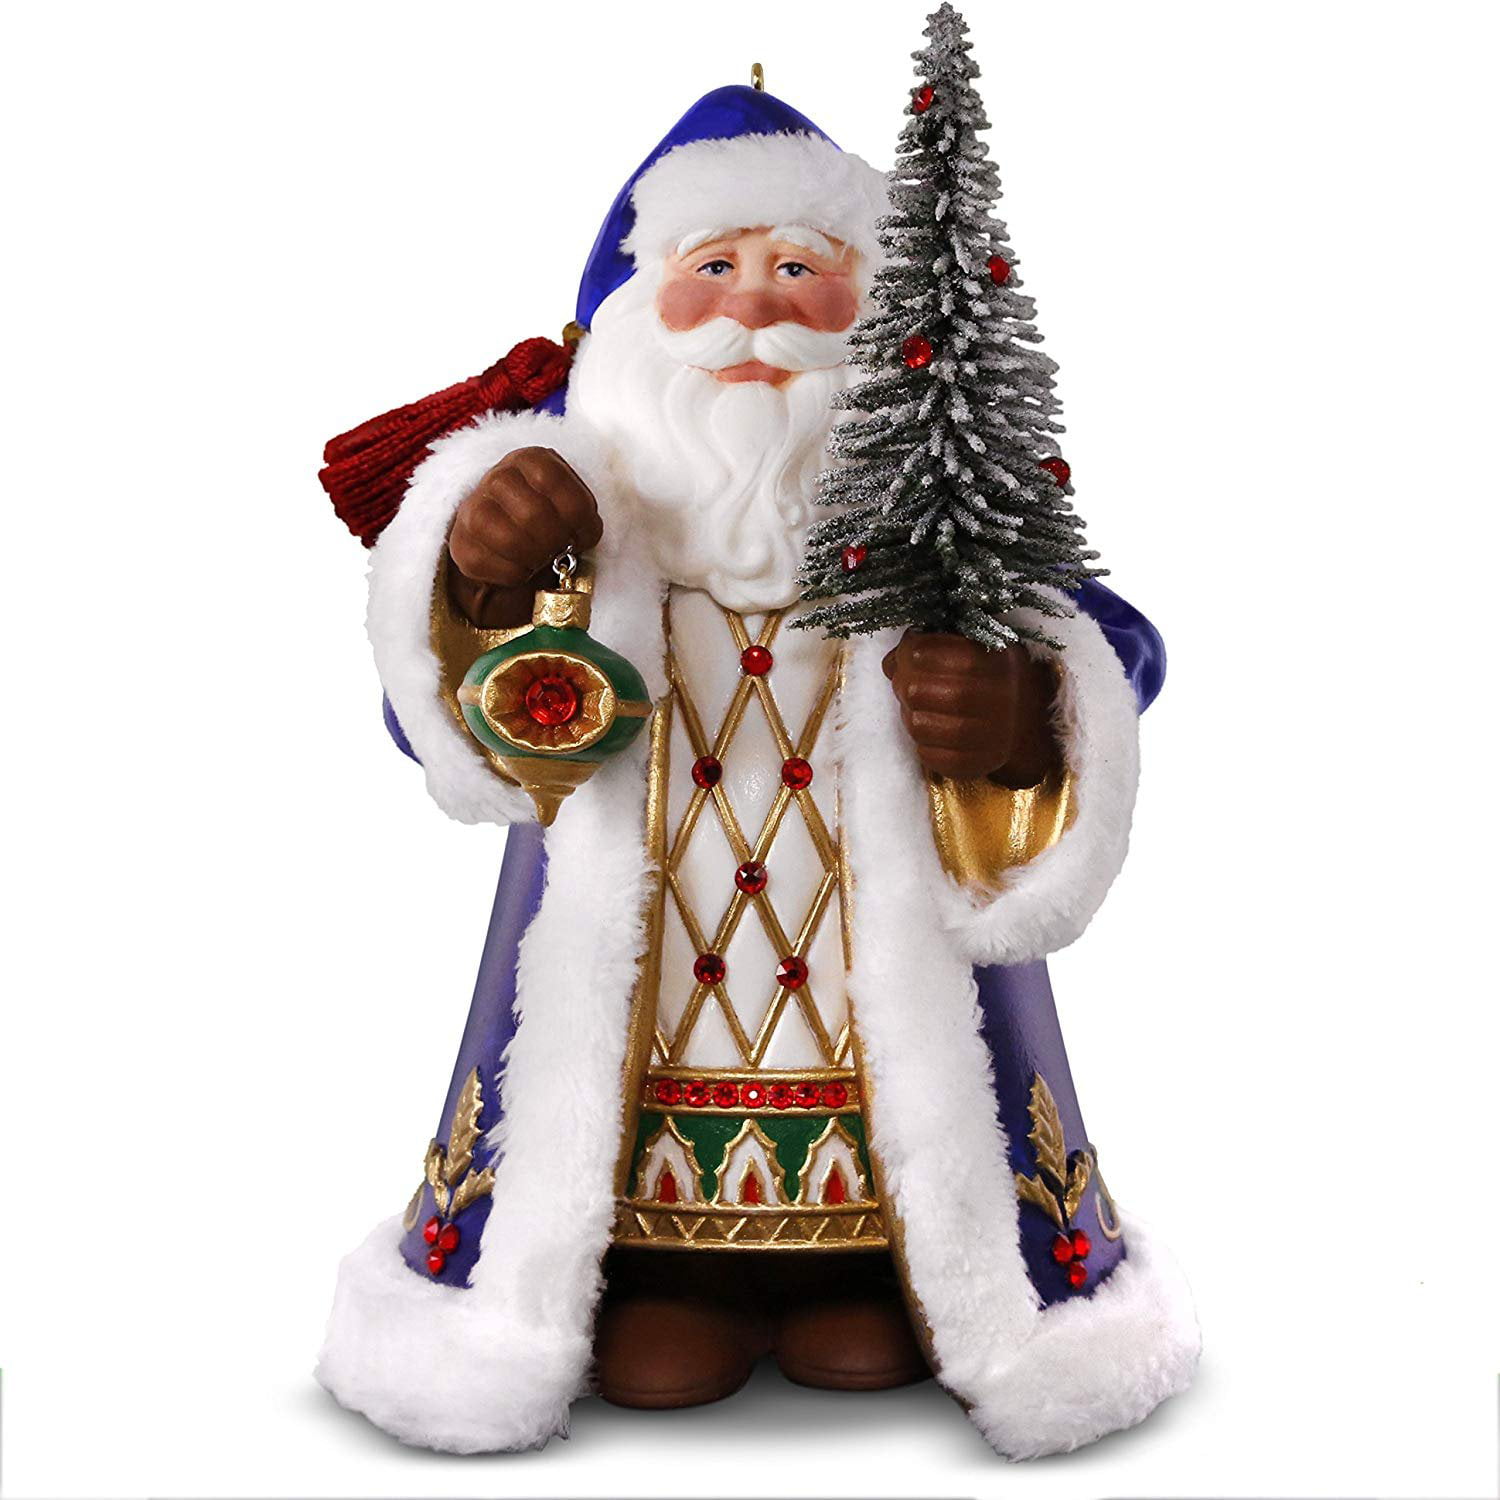 Hallmark Keepsake Christmas Ornament 2018 Year Dated, Old World Santa